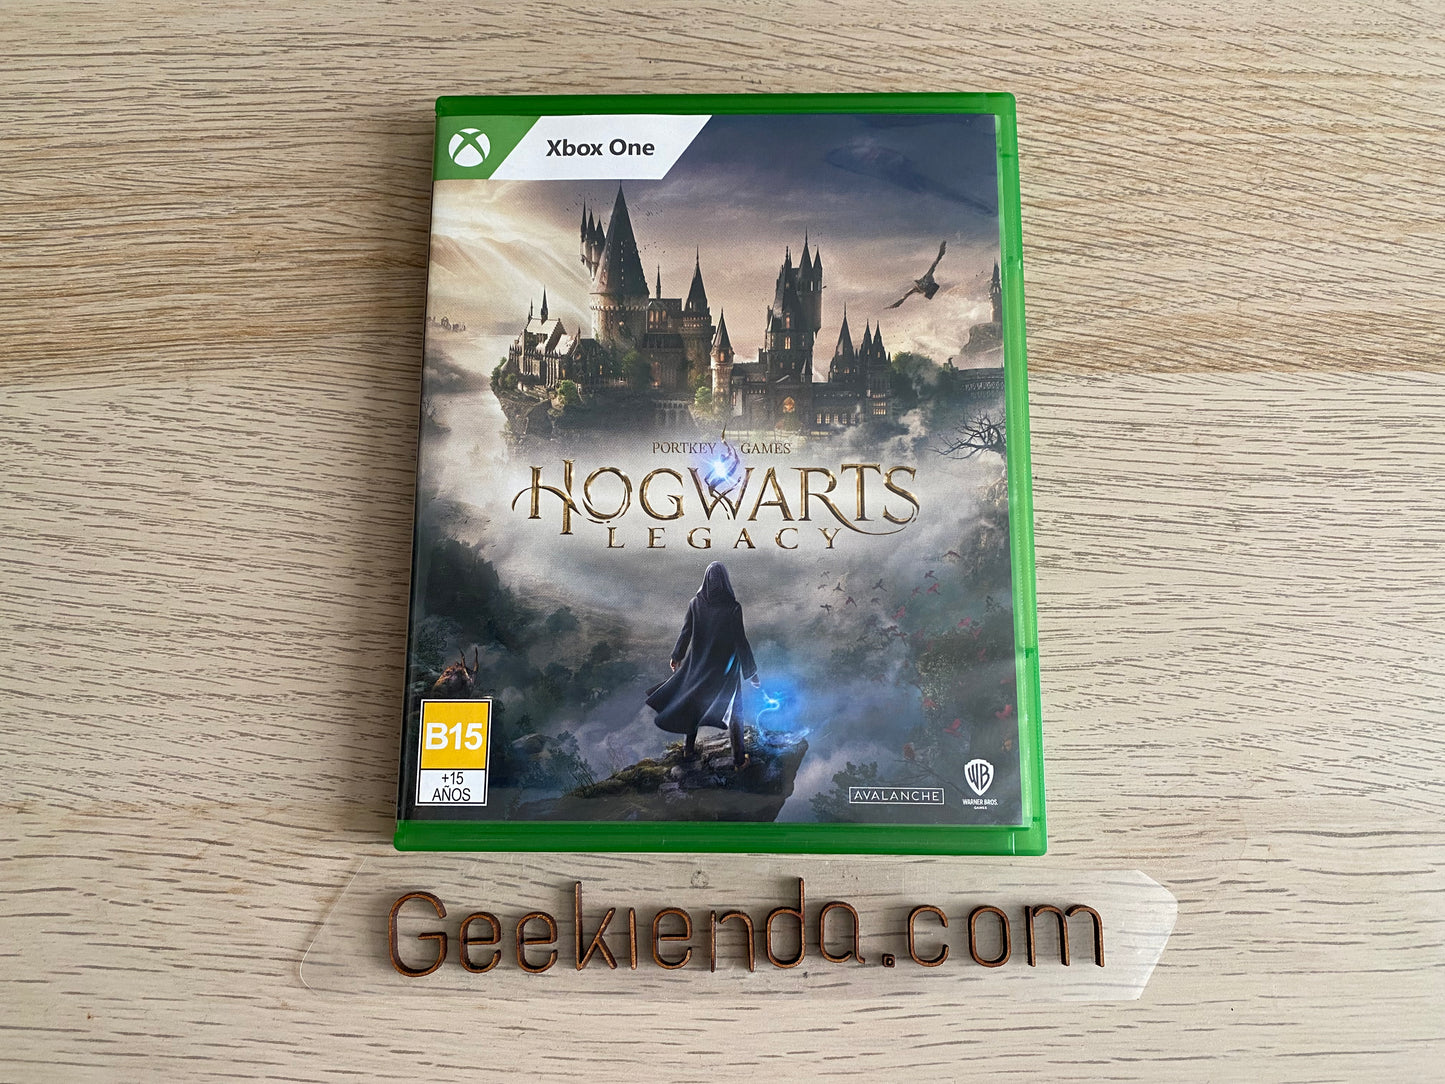 .Geekienda - Videojuegos juego hogwarts legacy  - Microsoft Xbox one